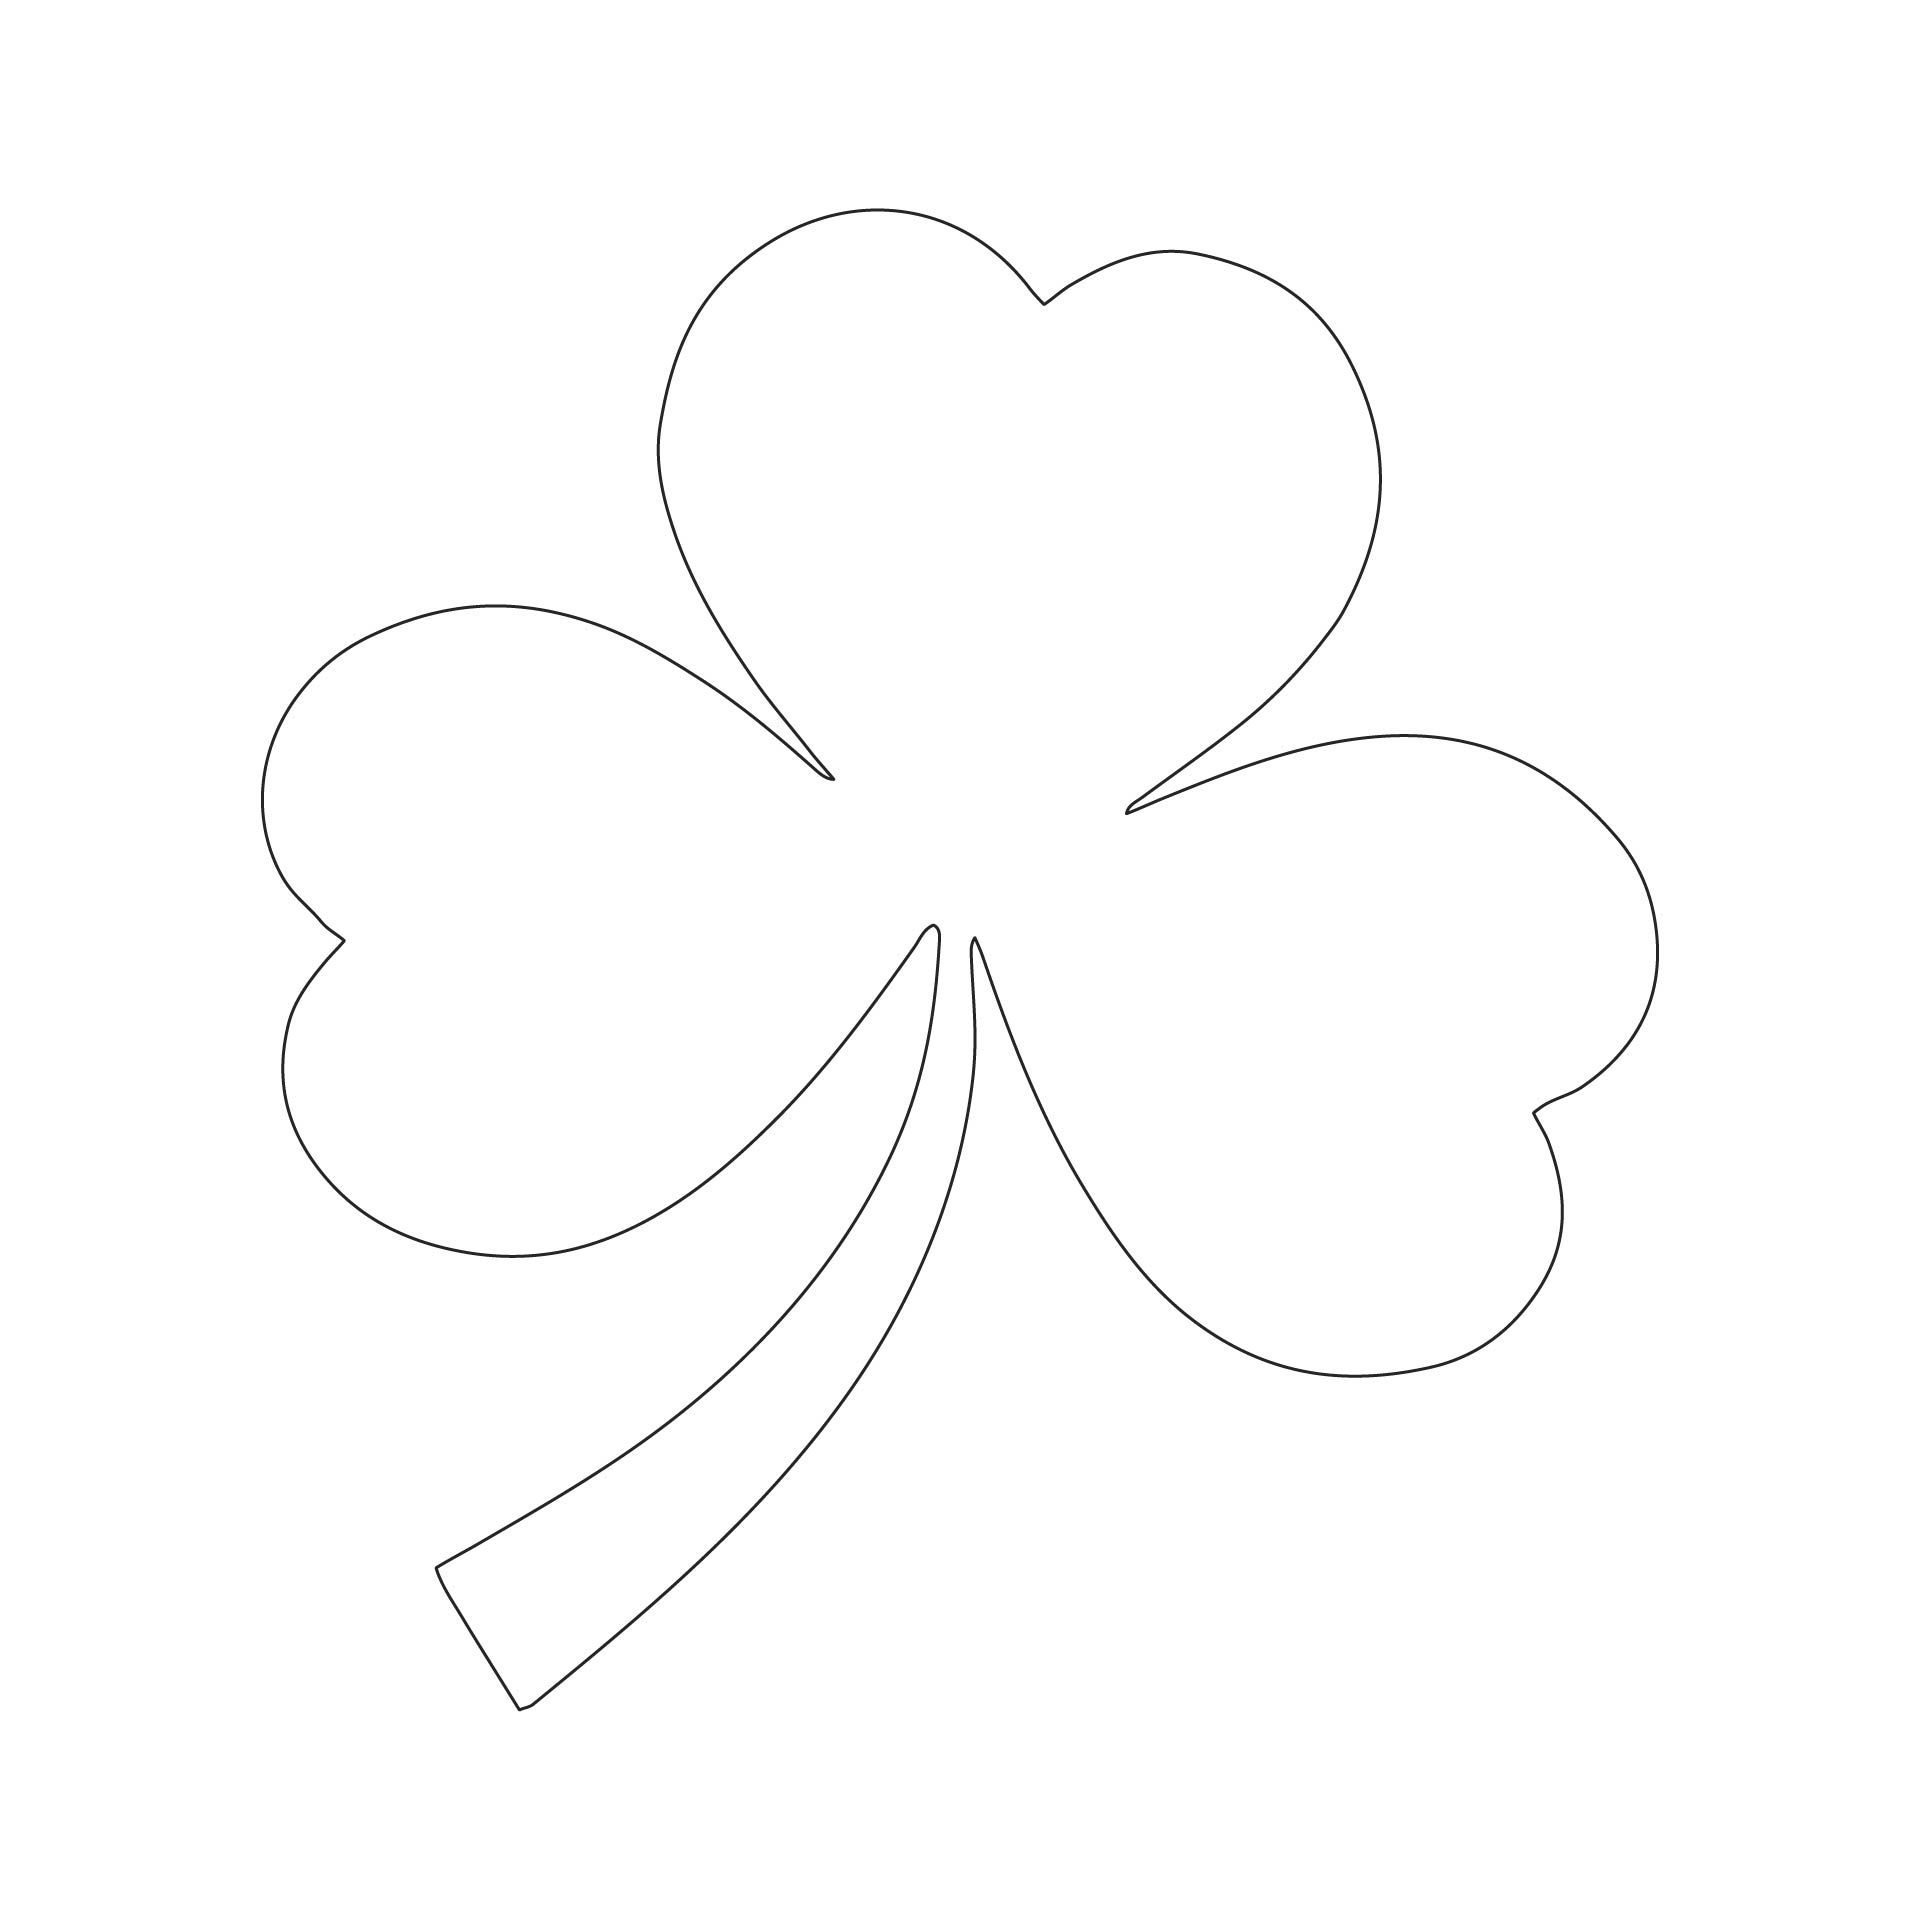 5 Best Images of Four Leaf Shamrock Template Printable St. Patrick's